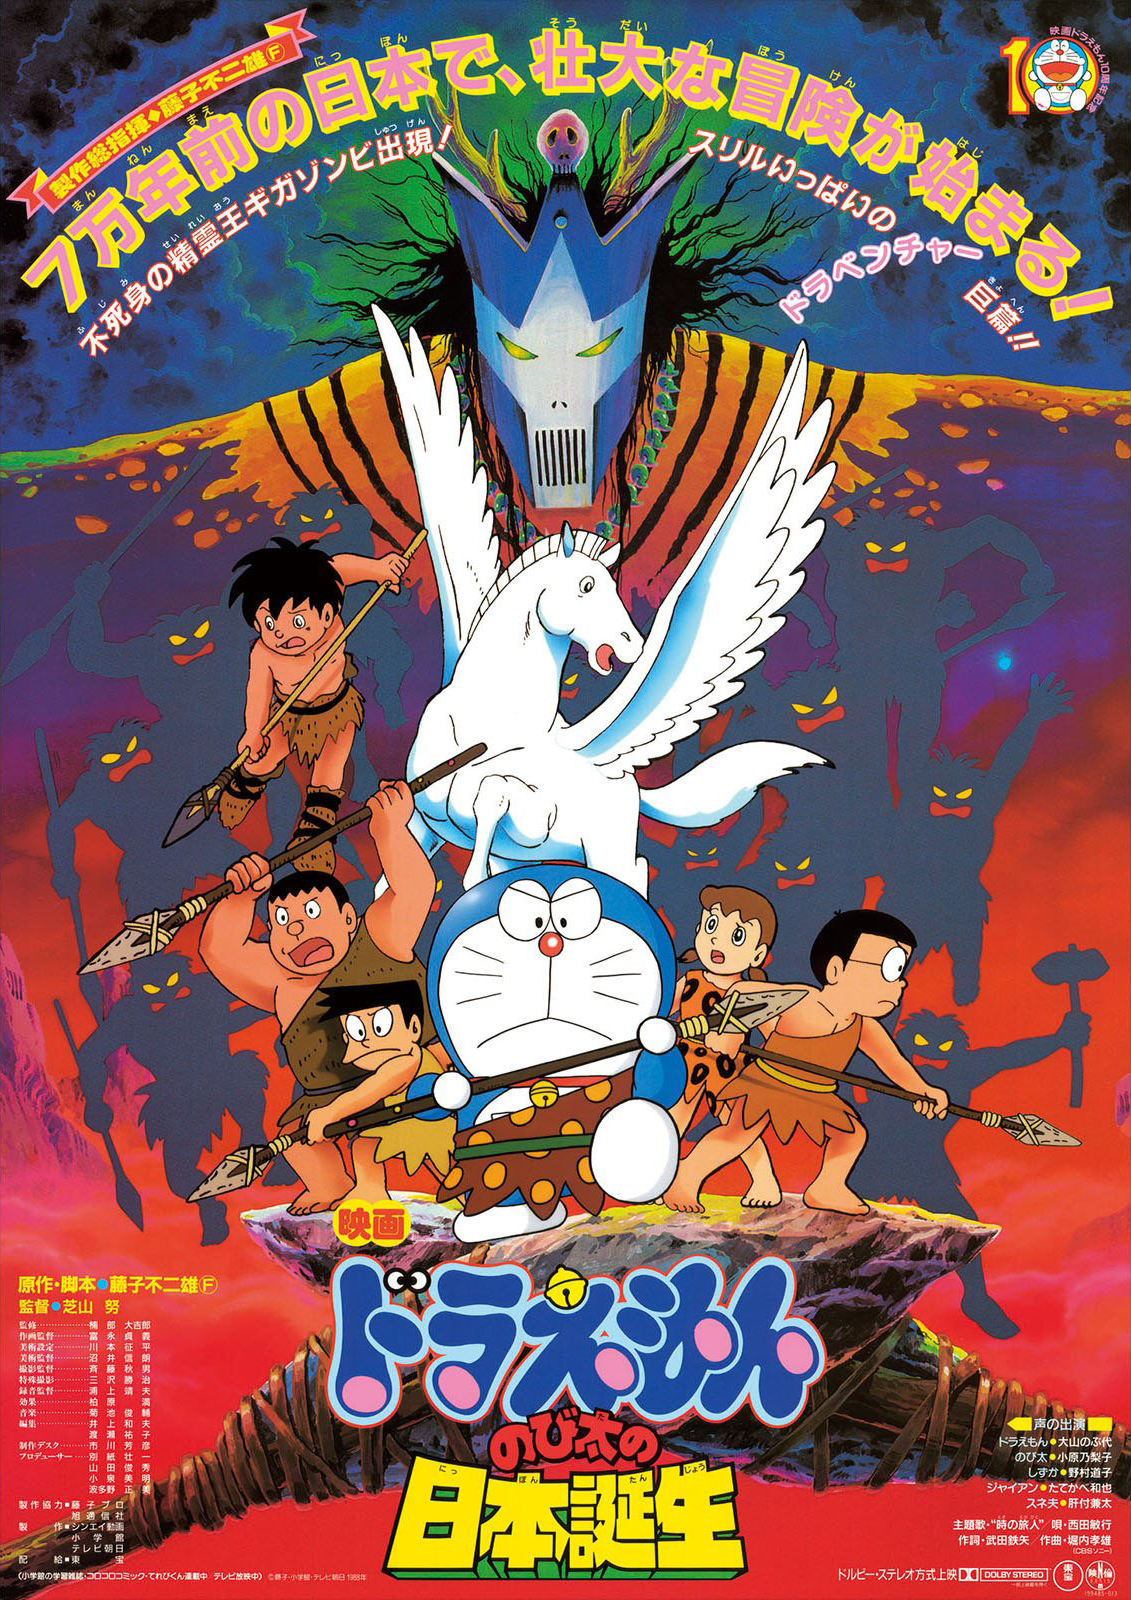 Doraemon The Movie 1989 โดเรม่อน เดอะมูฟวี่ ตอน ท่องแดนญี่ปุ่นโบราณ พากย์ไทย